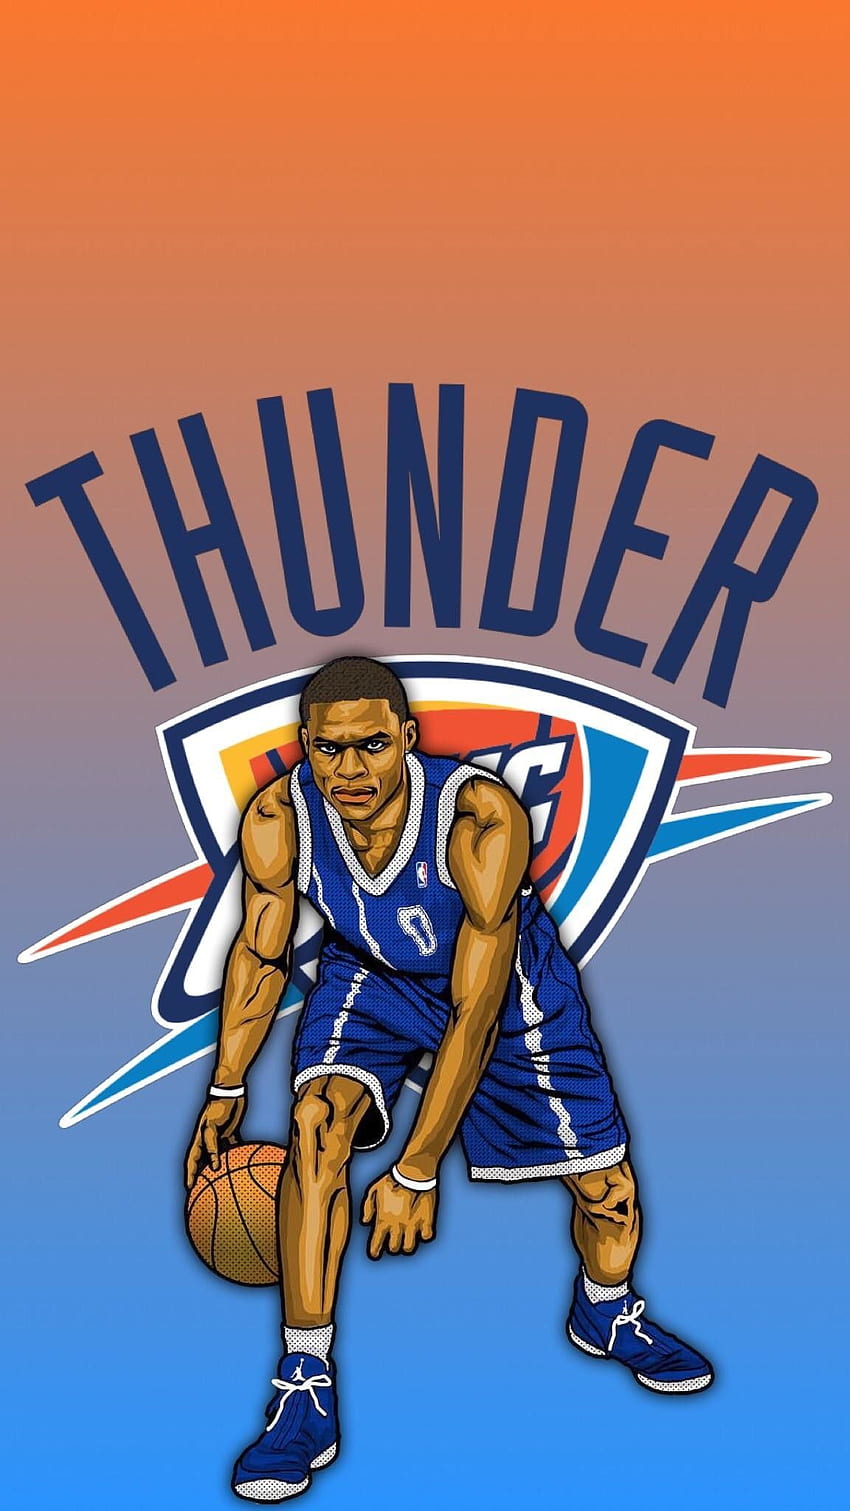 Latar belakang Russell Westbrook, Pemain Kartun NBA wallpaper ponsel HD